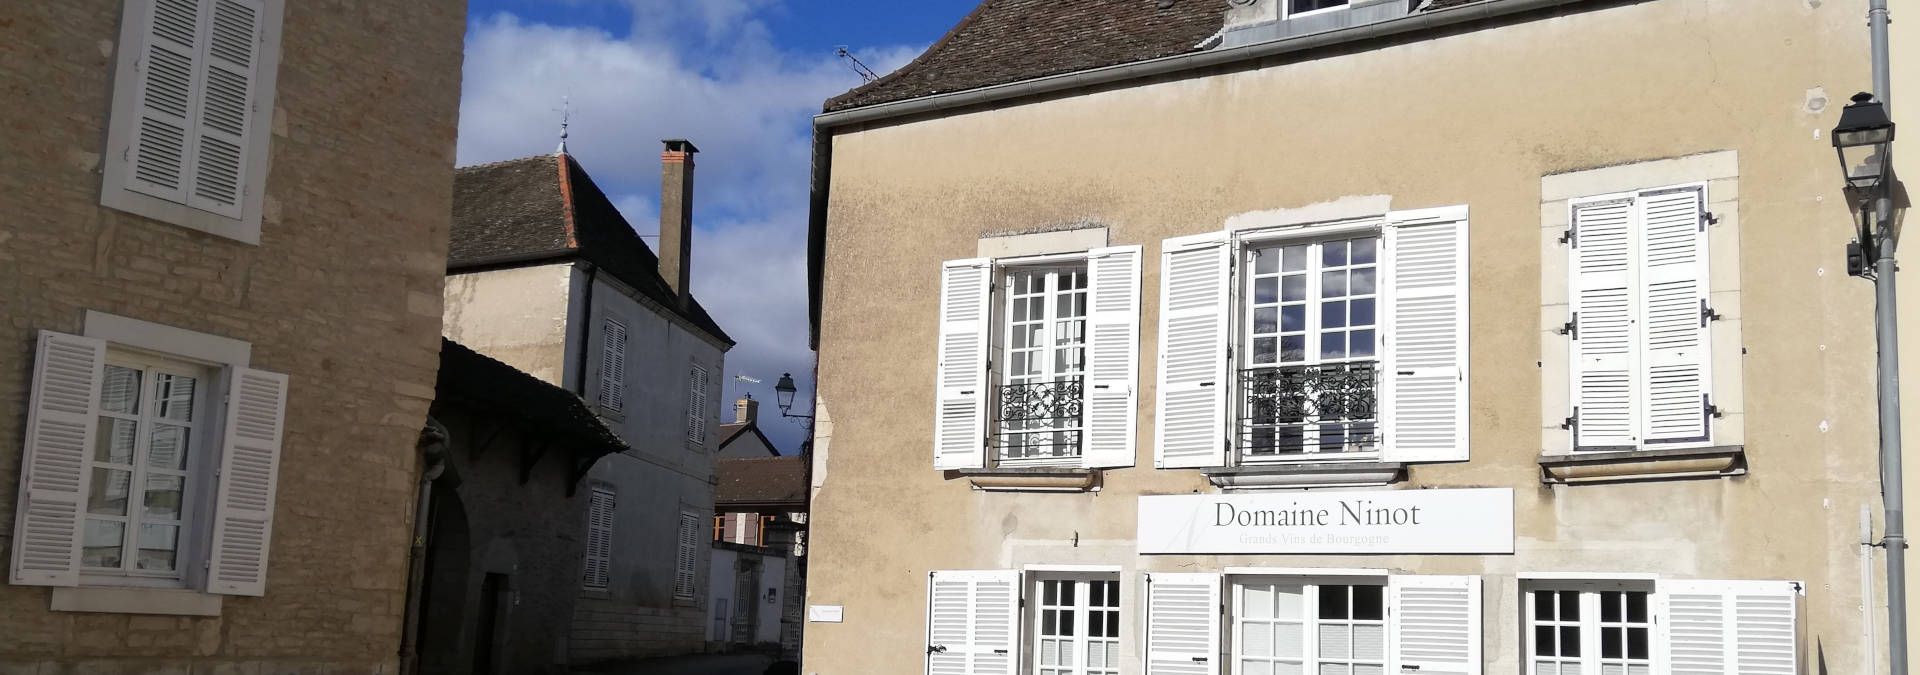 Domaine Ninot - Rue des Vignerons